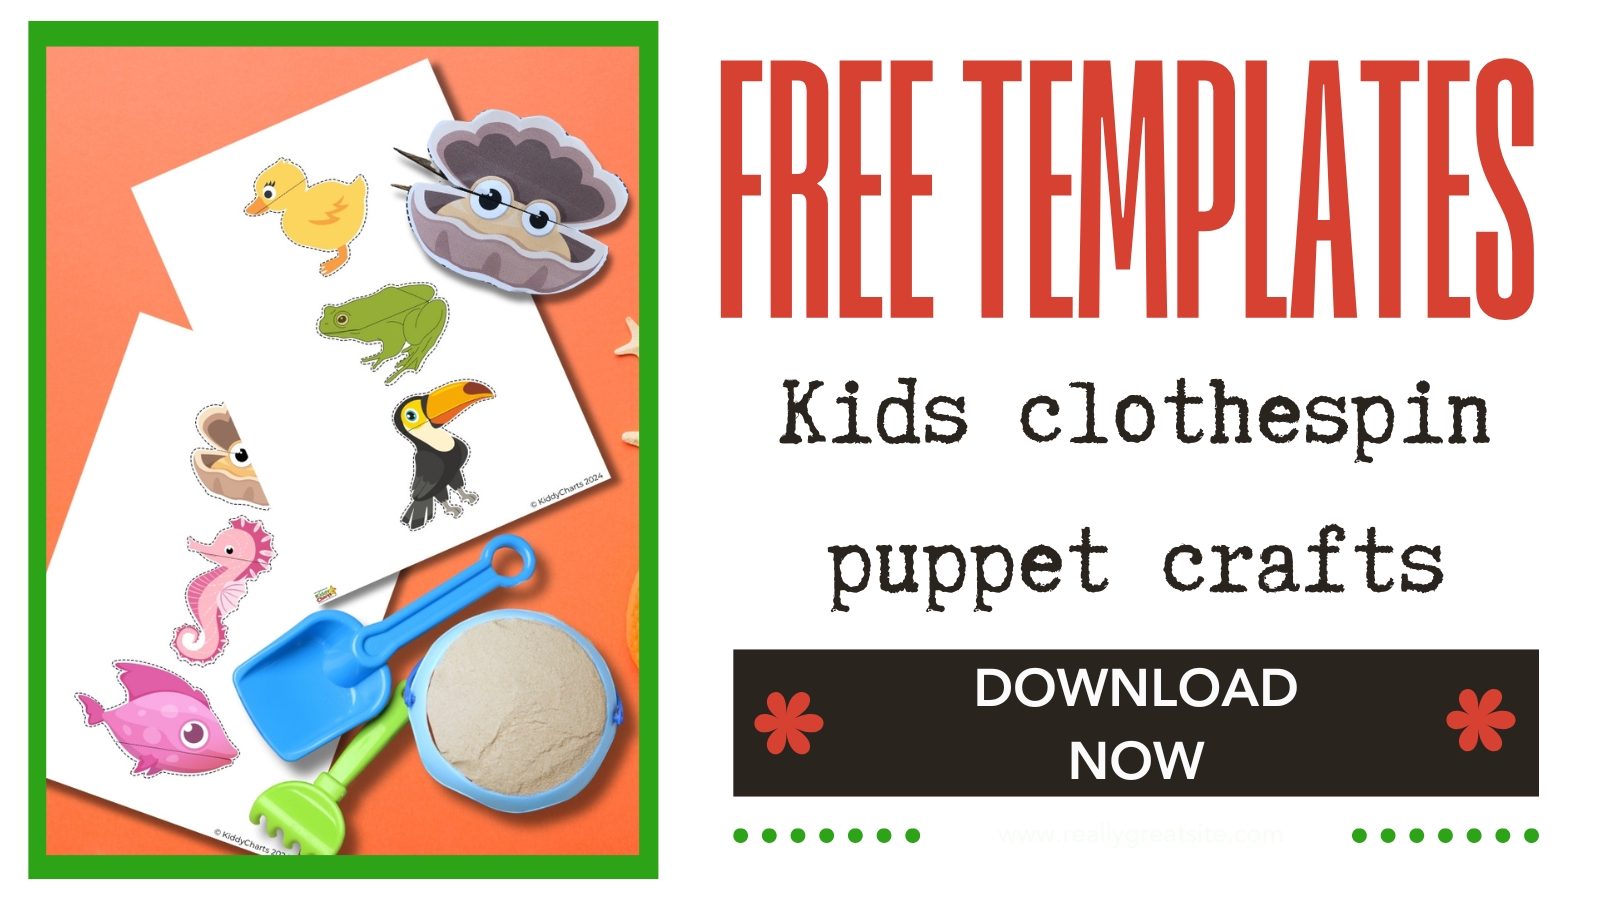 Free clothespin animal puppet templates: A fun kids craft